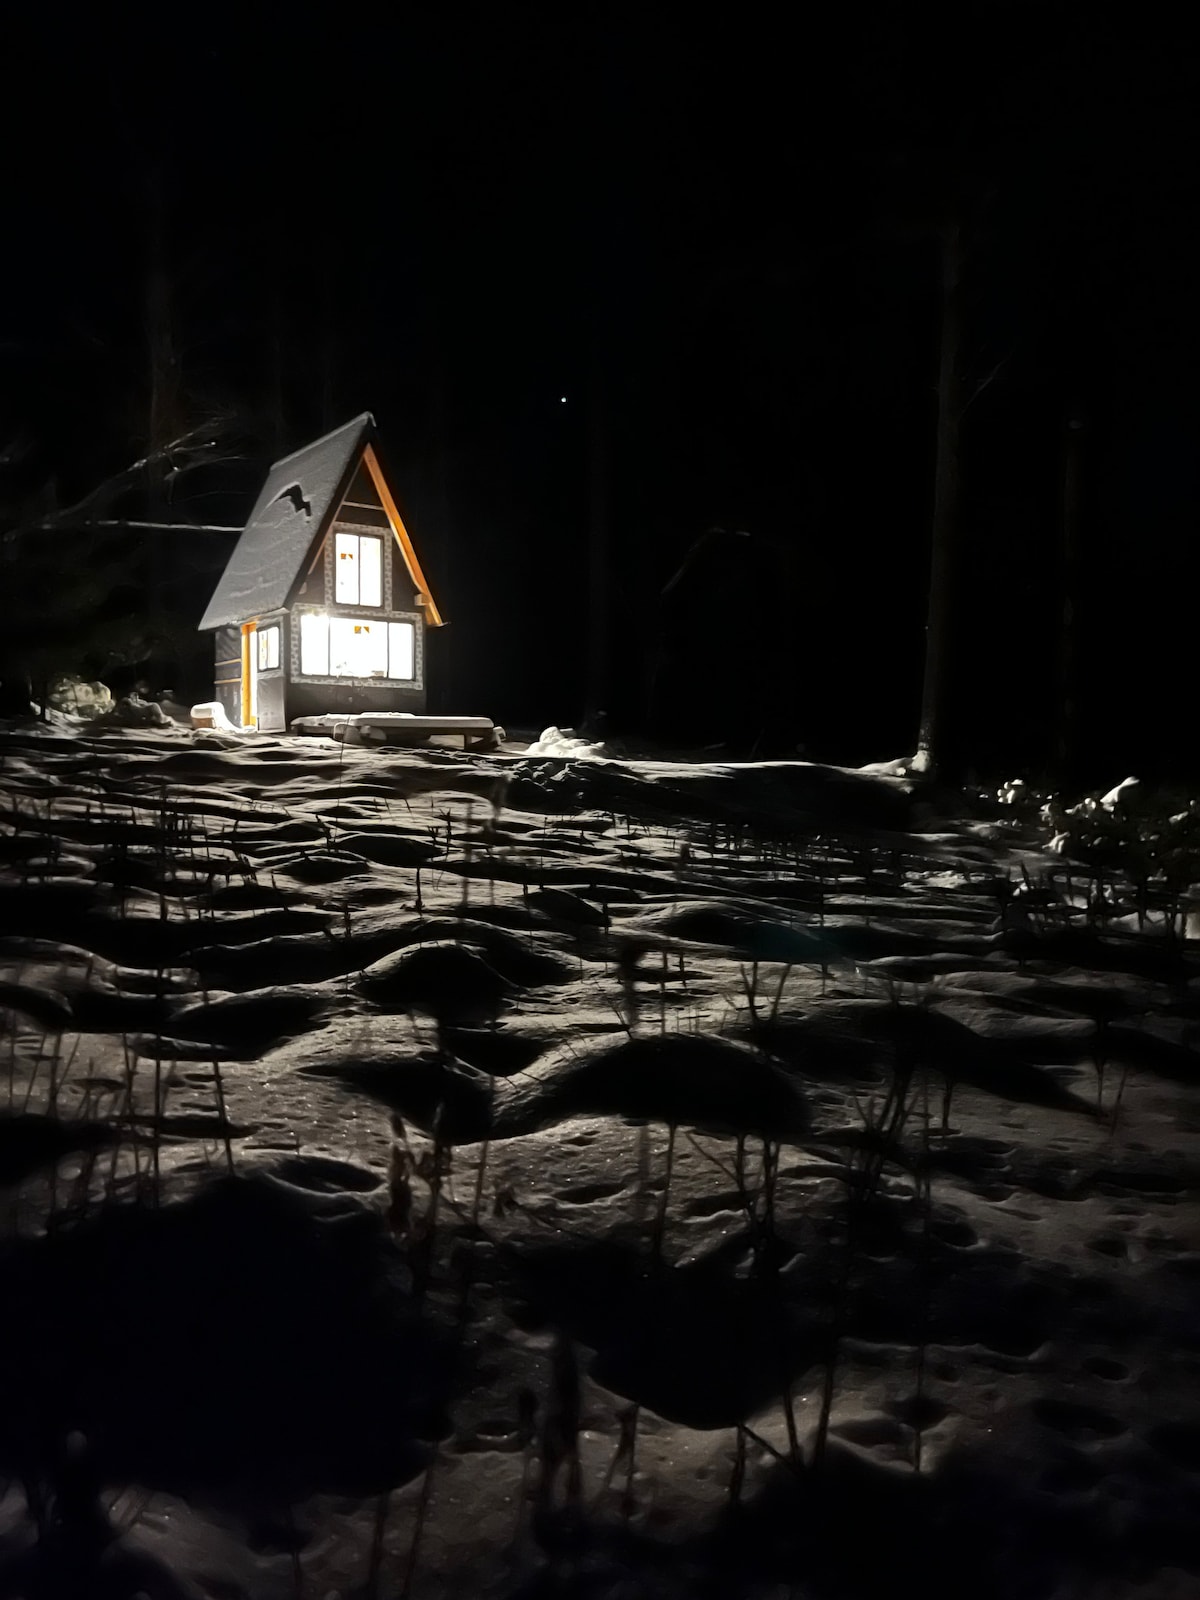 Tiny Timber Vermont